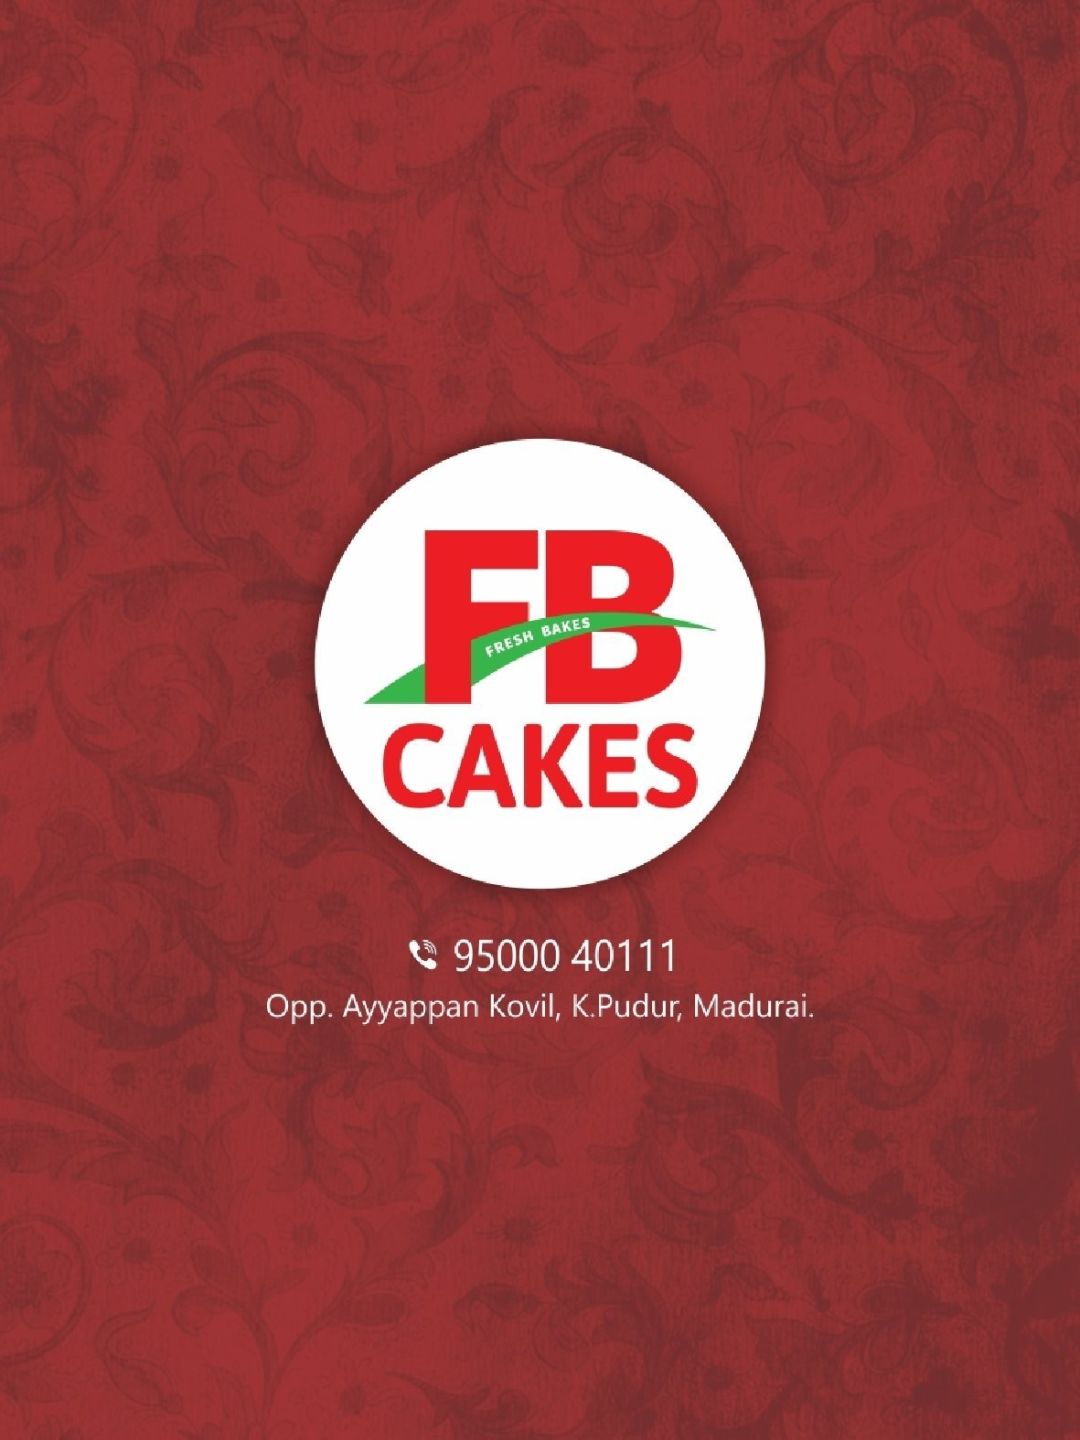 FB CAKES - Bakery - Madurai - Tamil Nadu | Yappe.in-cacanhphuclong.com.vn